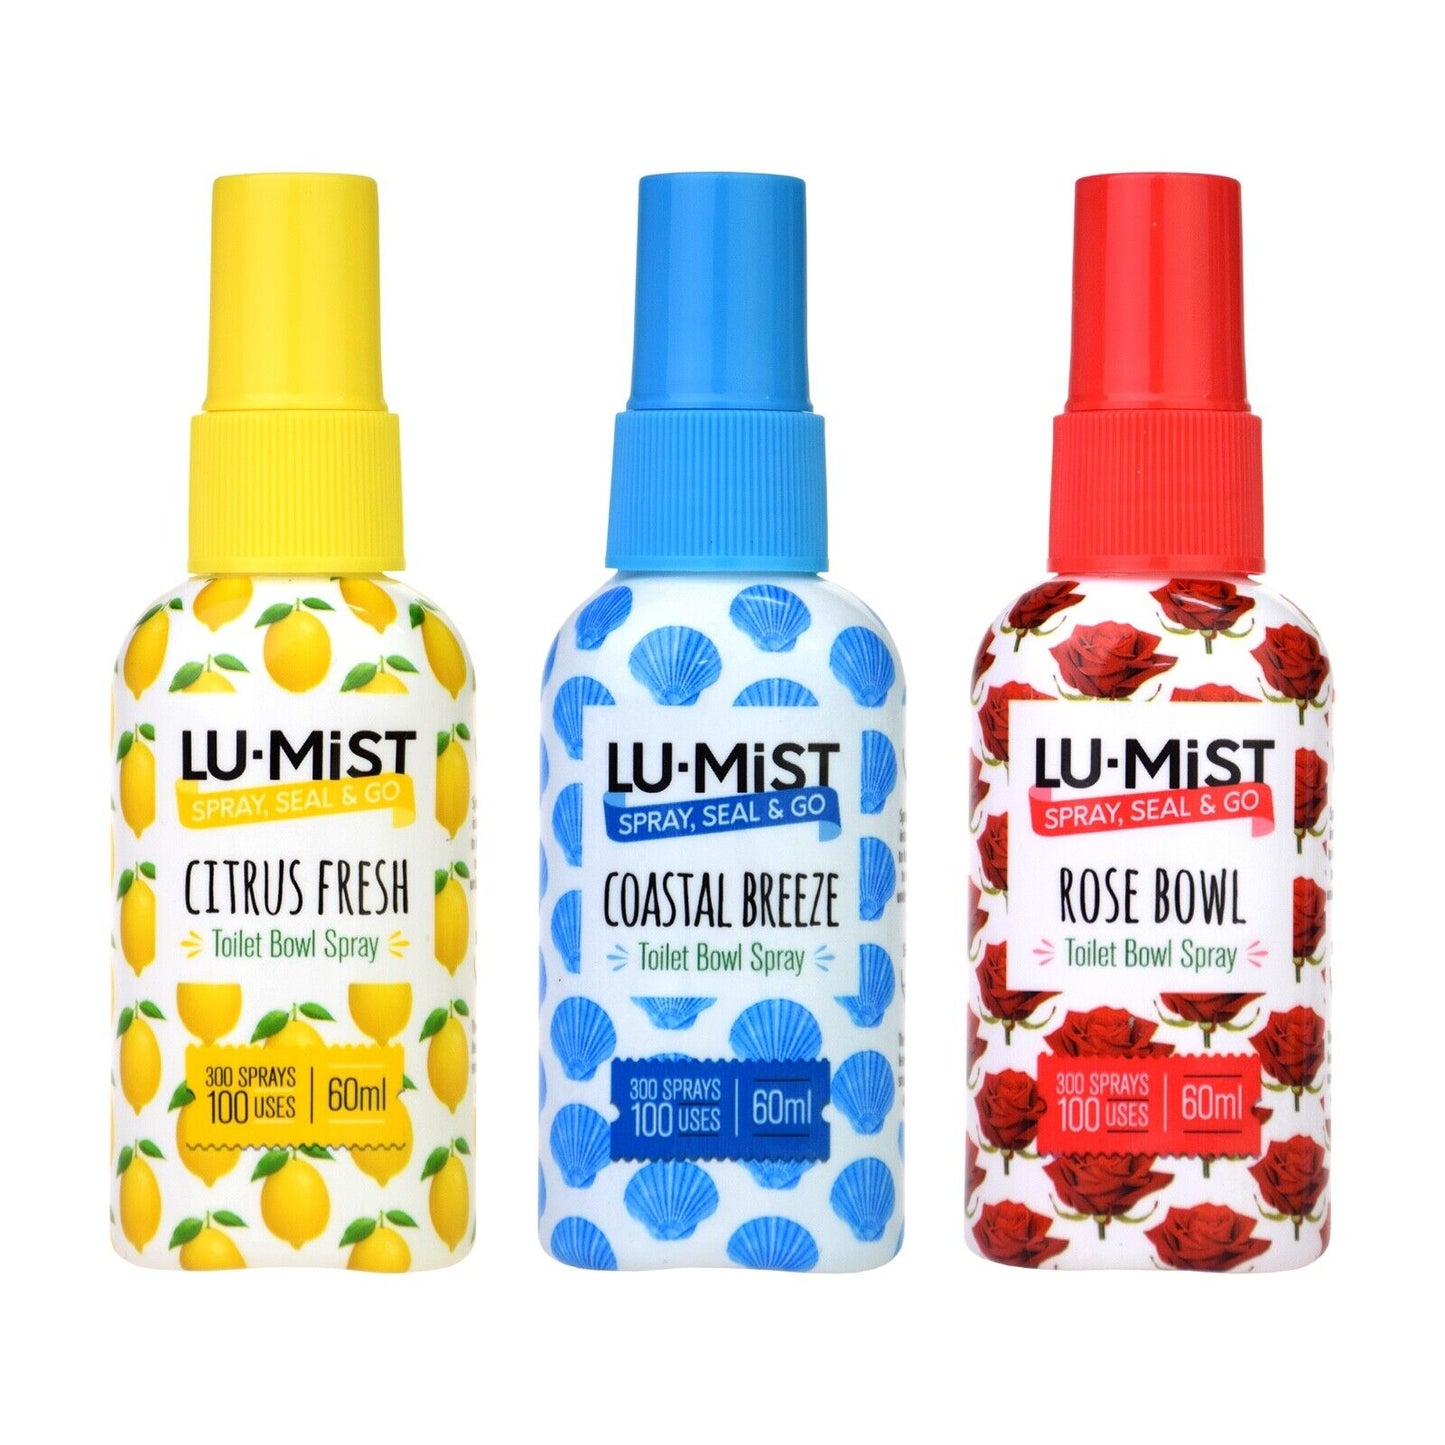 3x Lu-Mist Toilet Spray - Rose, Lemon, Coastal - 1 of Each 60ml/300 Sprays